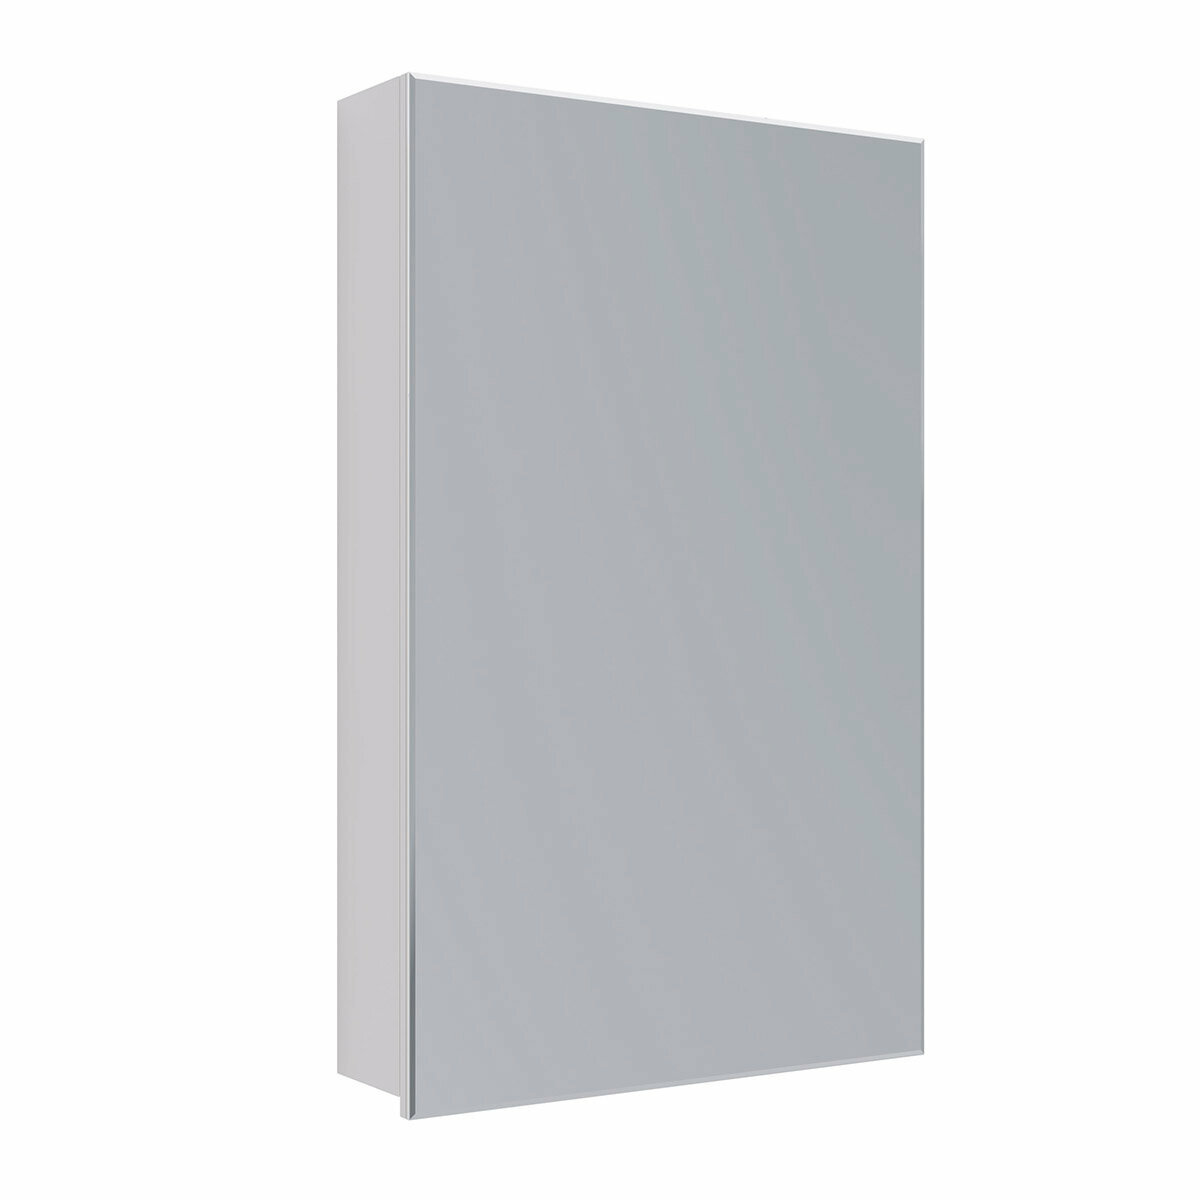 Шкаф зеркальный Lemark UNIVERSAL 50х80 см 1 дверный петли слева цвет корпуса: Белый глянец